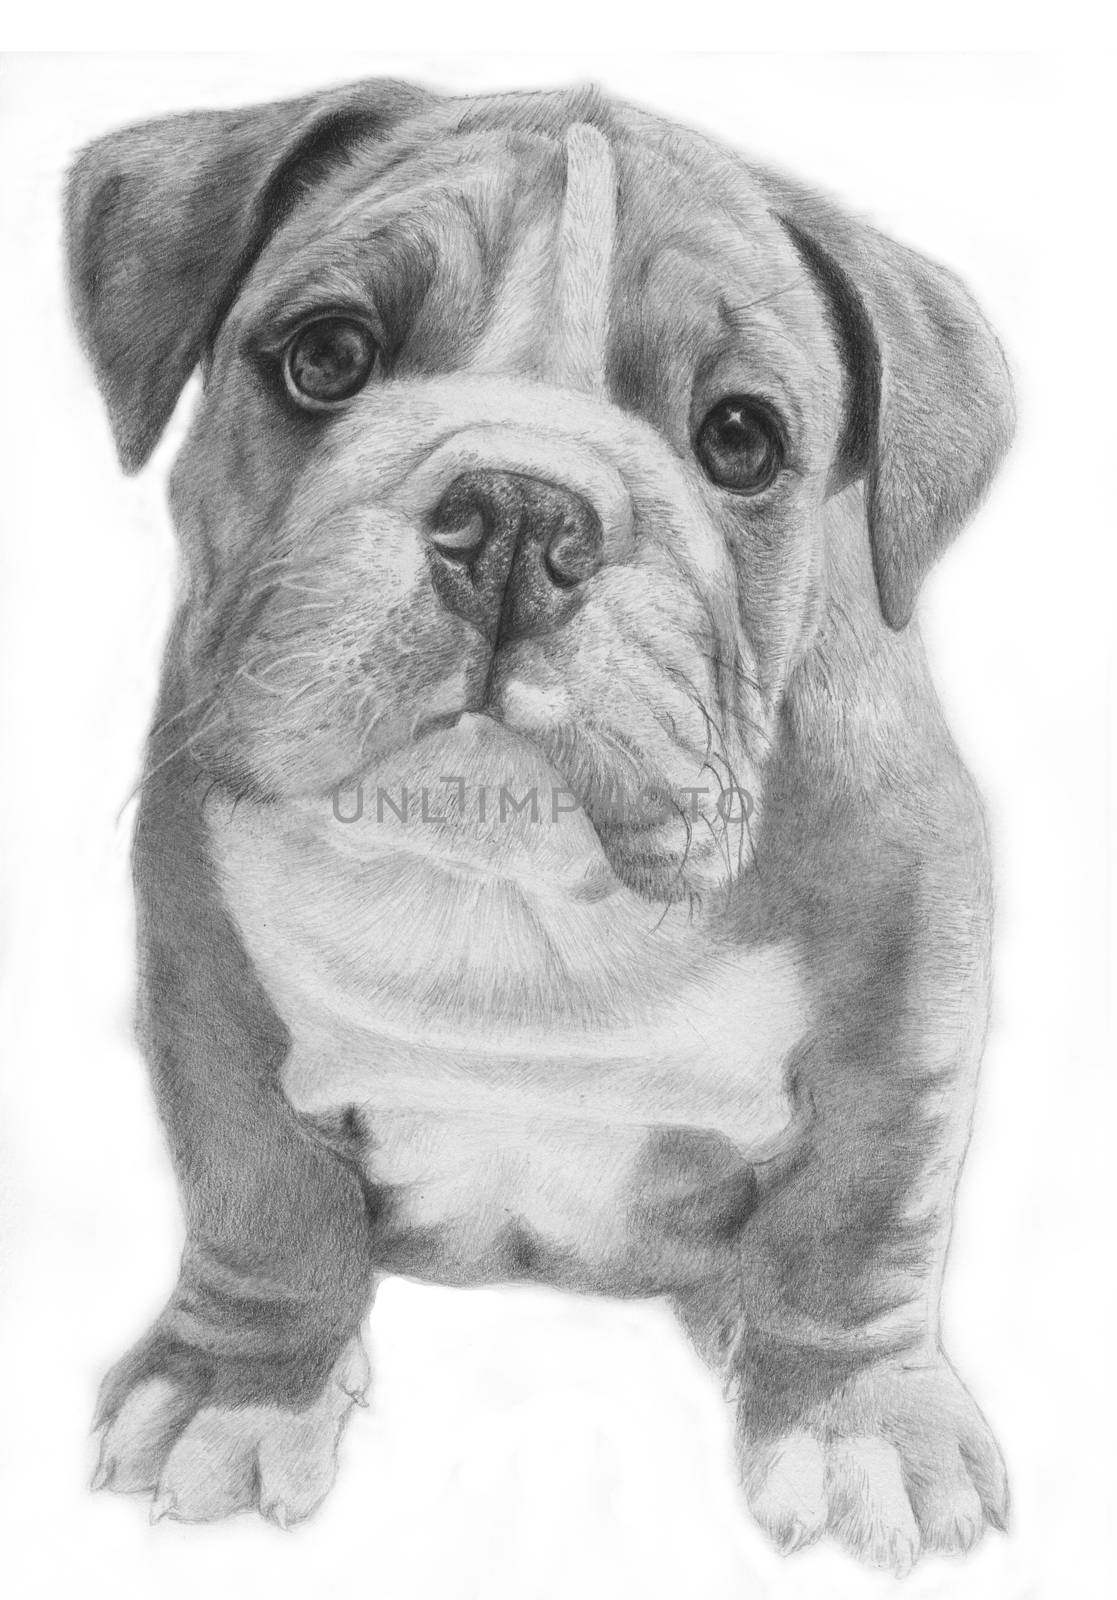 Cute bulldog hand-drawn illustration by Morphart